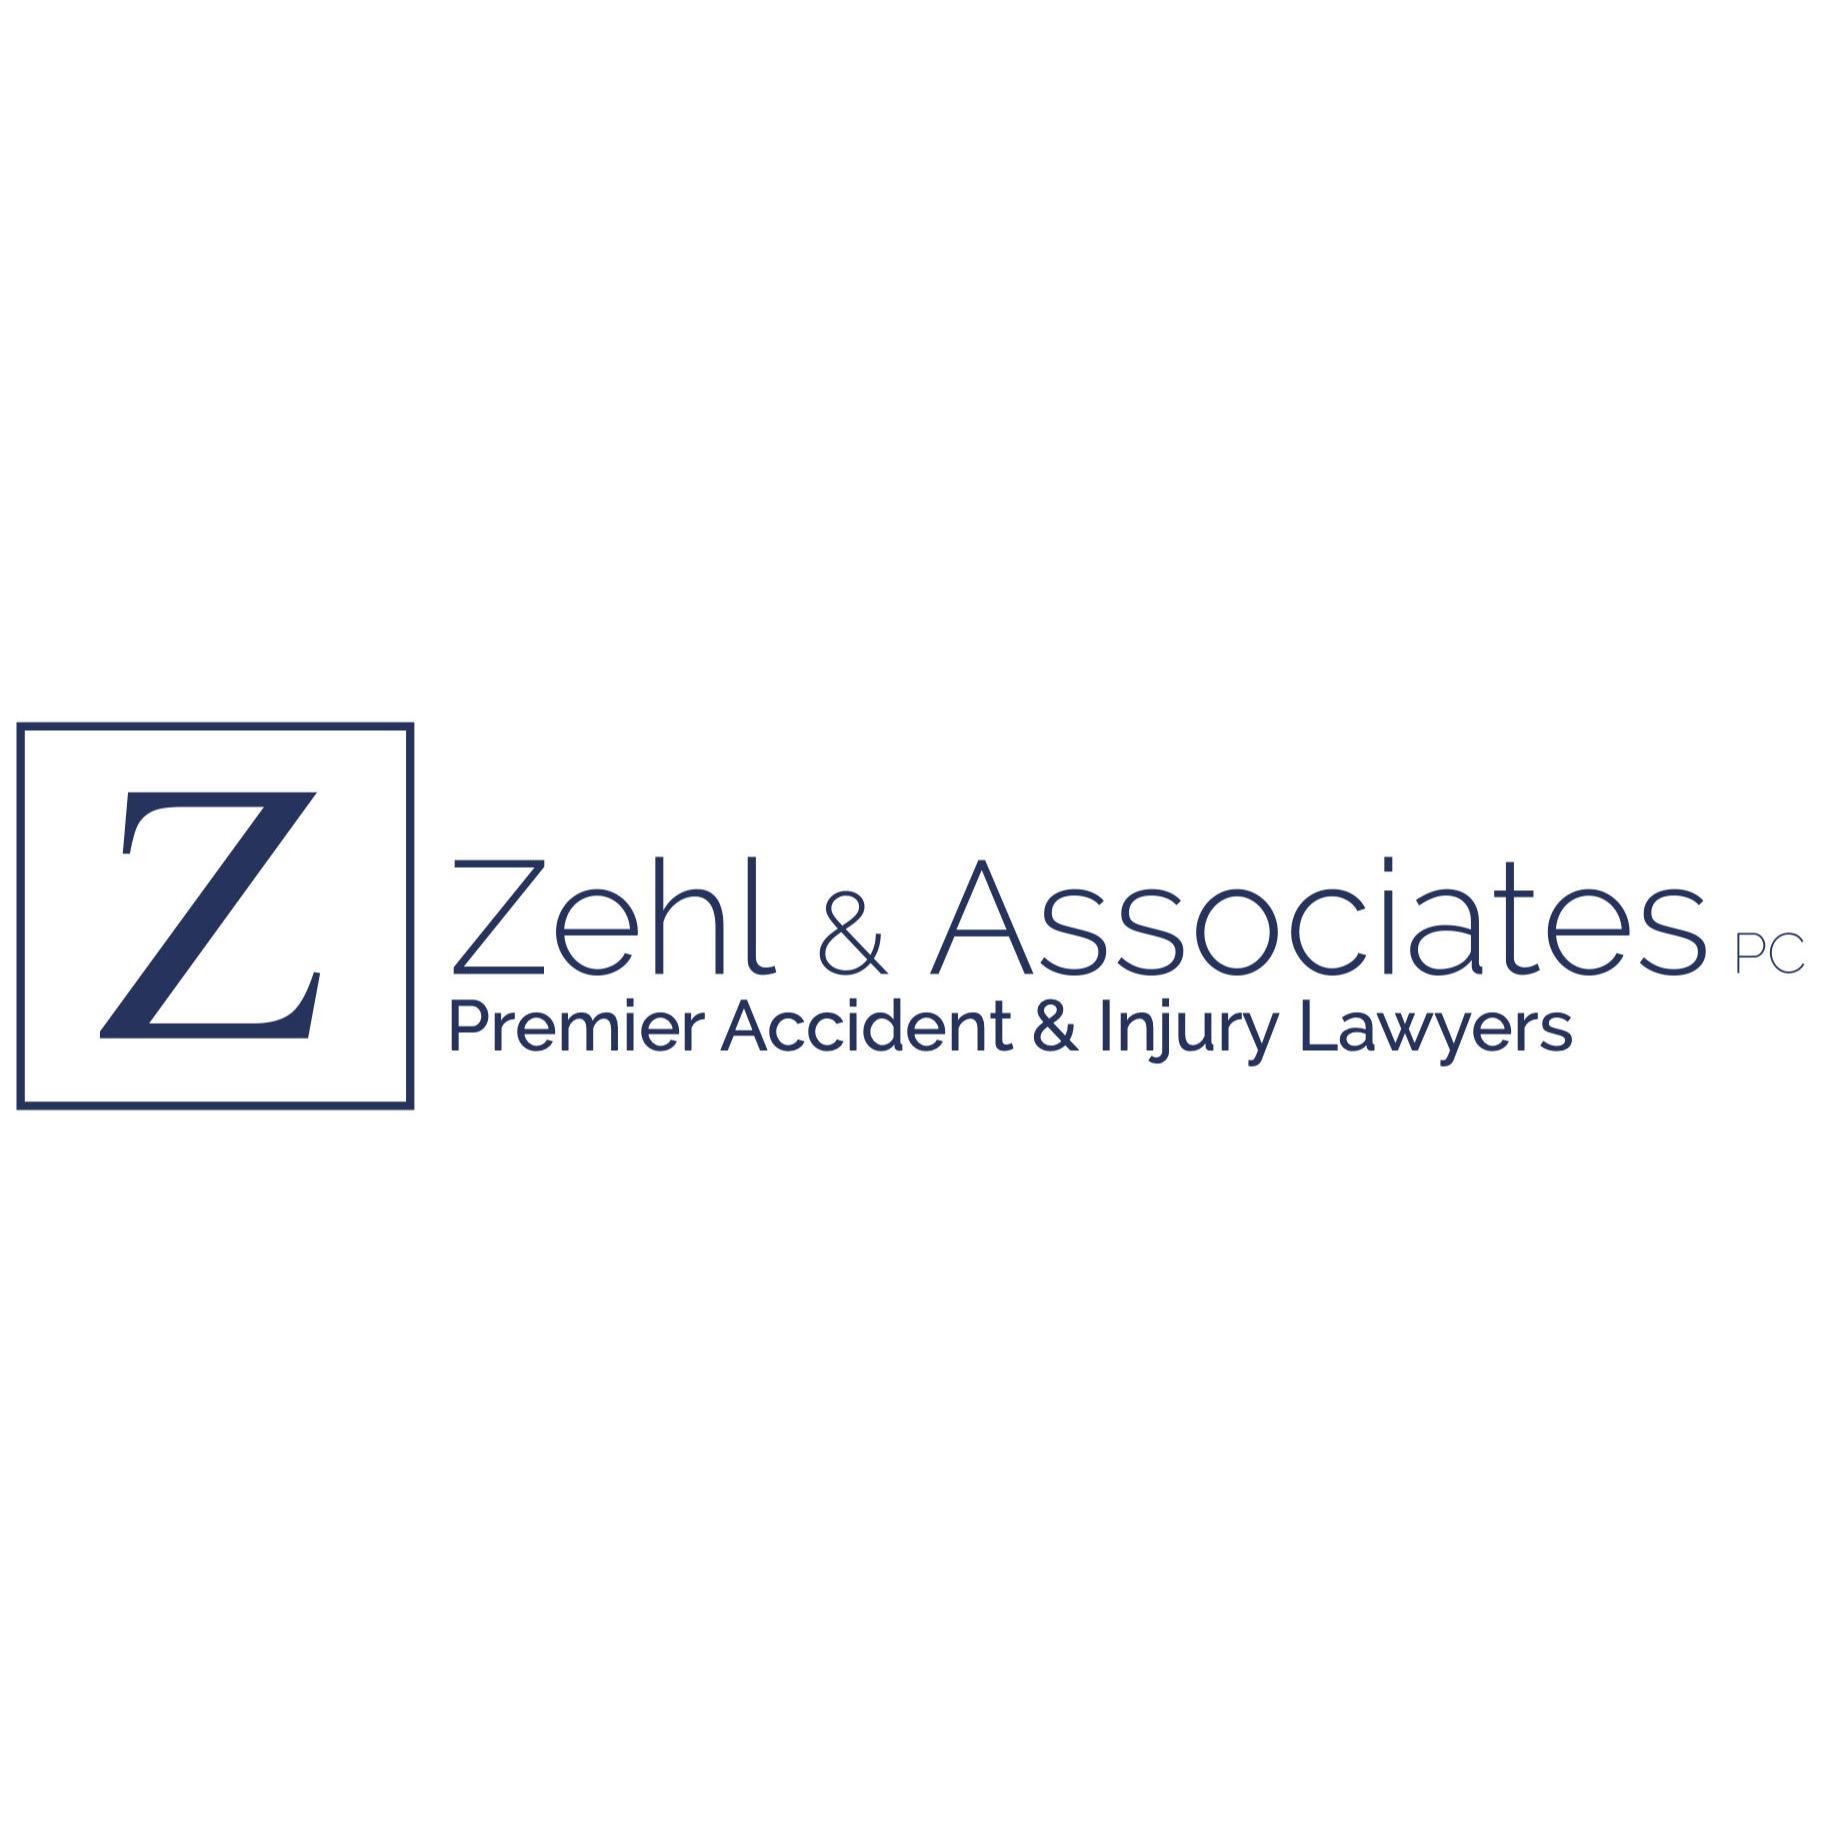 Zehl & Associates Injury & Accident Lawyers Logo Zehl & Associates Accident & Injury Lawyers - Houston Houston (713)491-6064